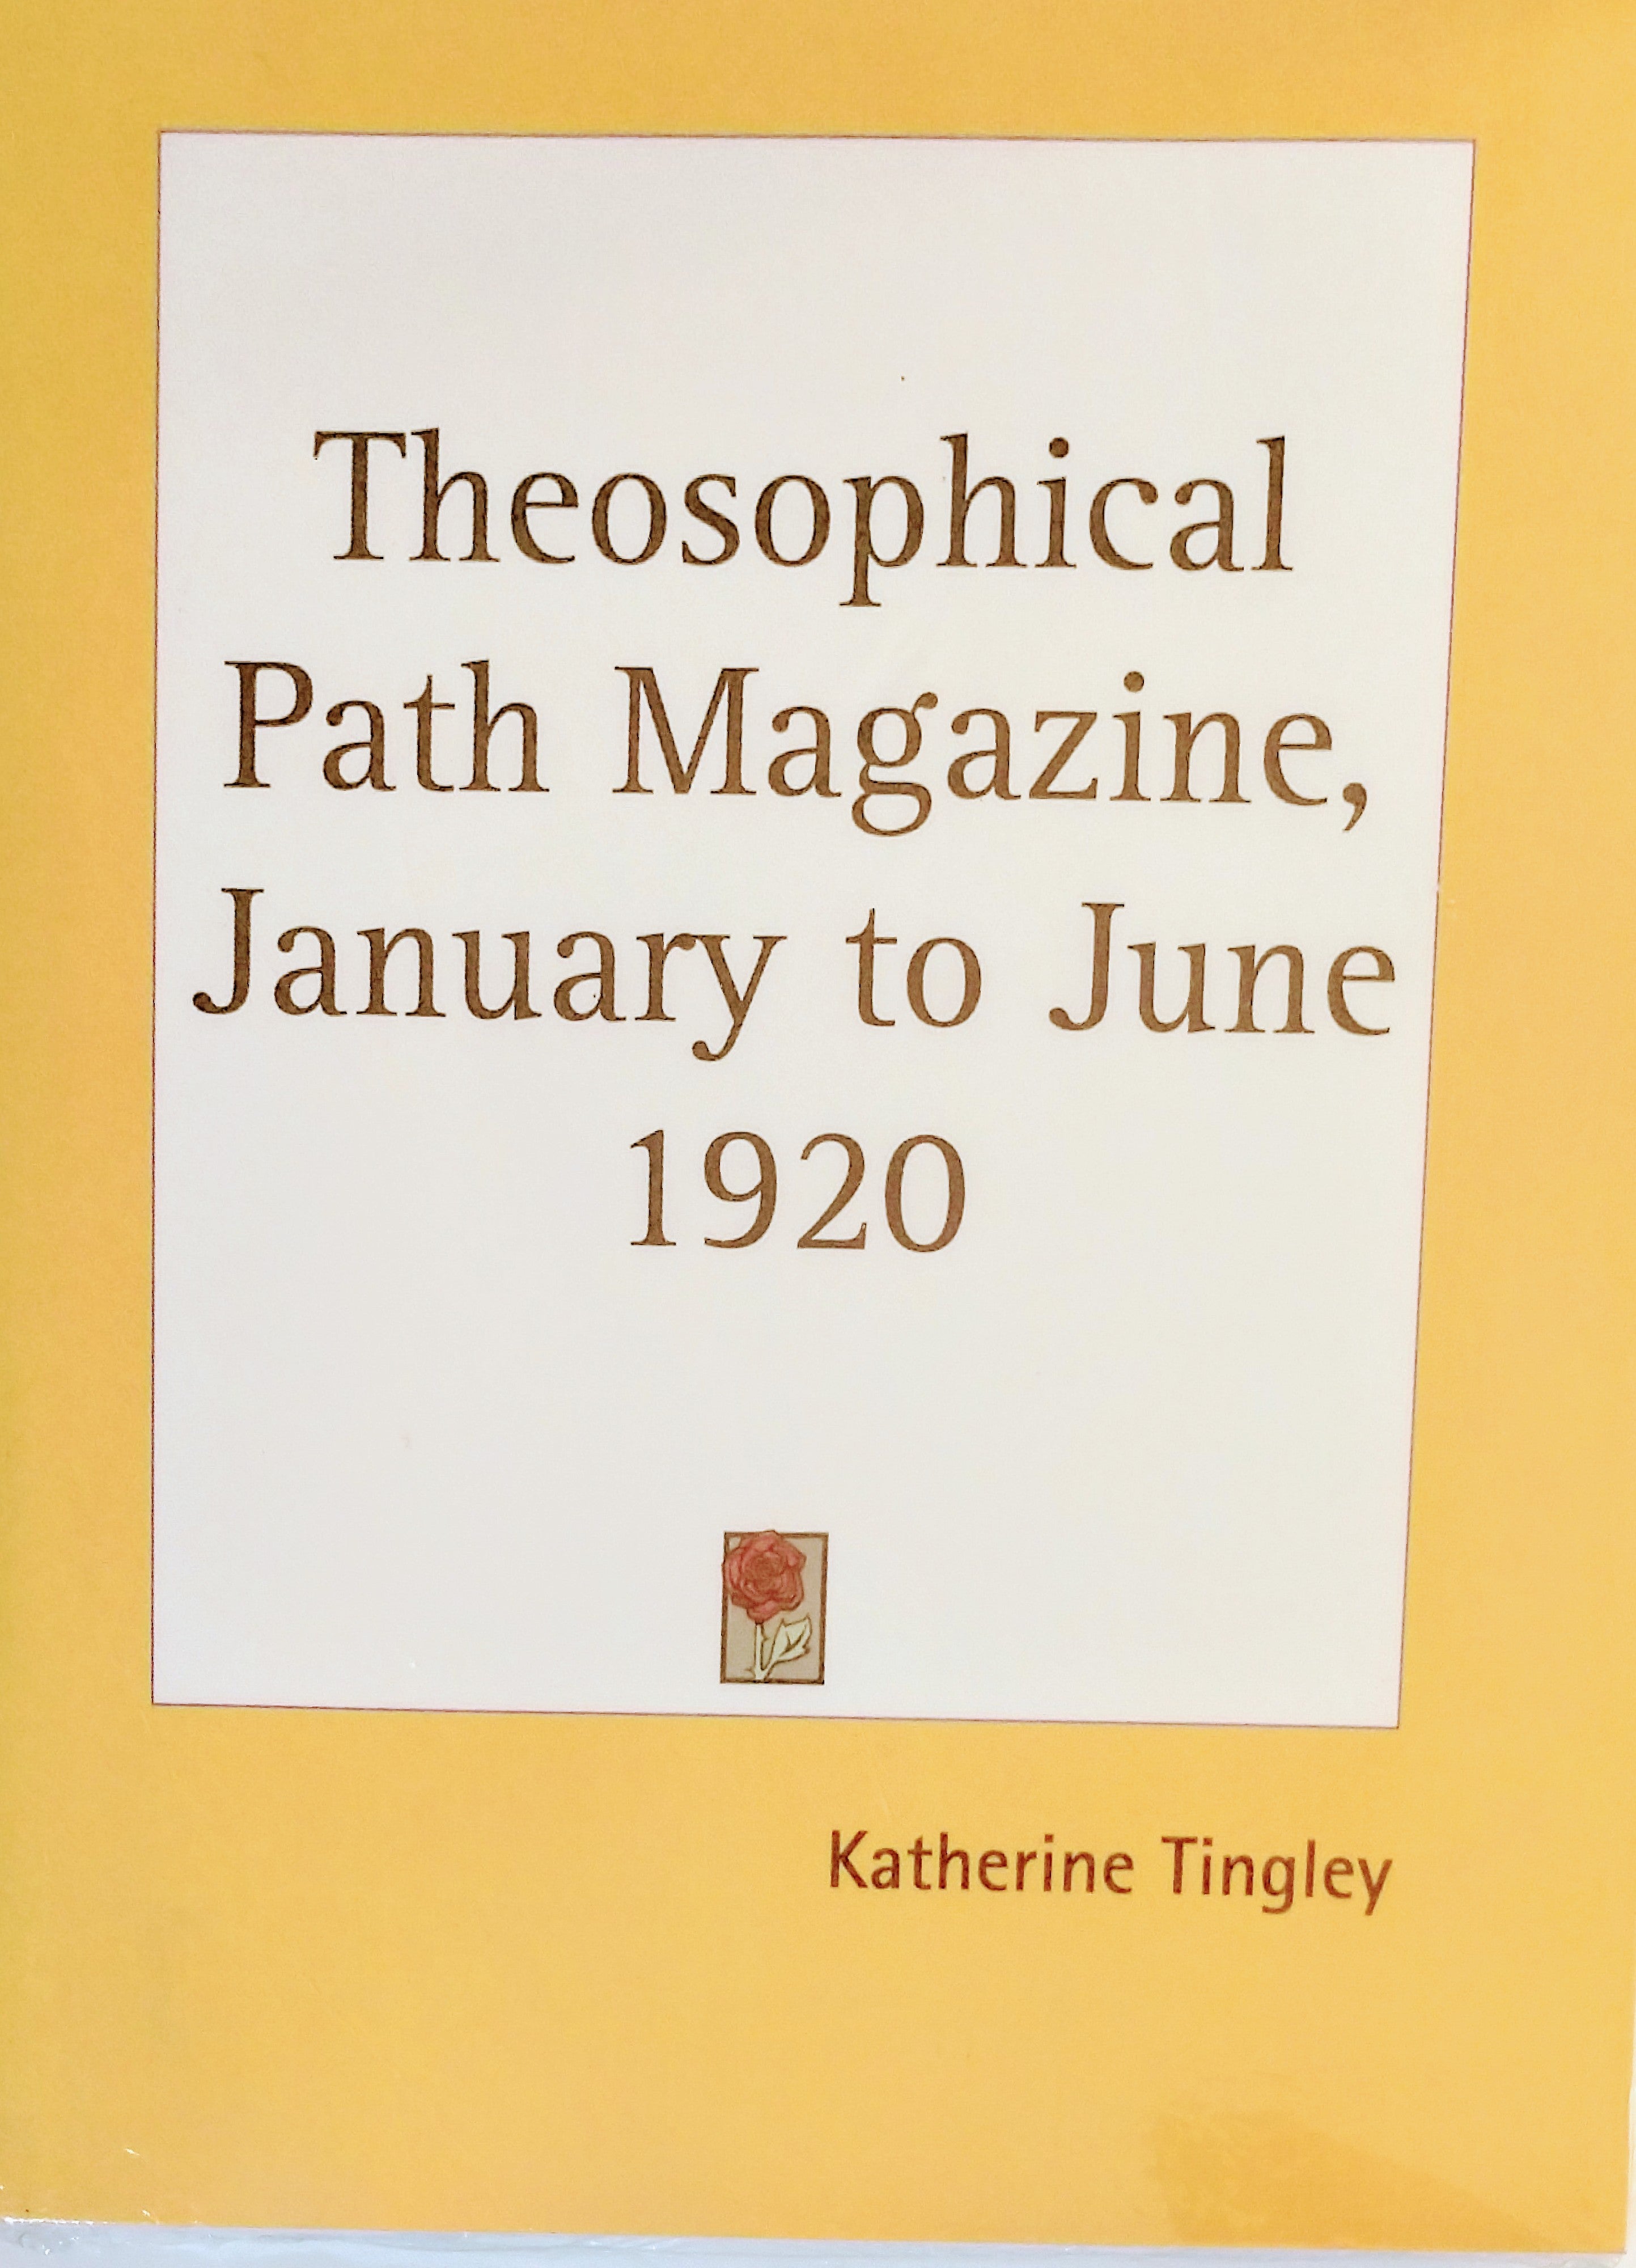 Theosophical Path Magazine January to June 1920 By Katherine Tingley